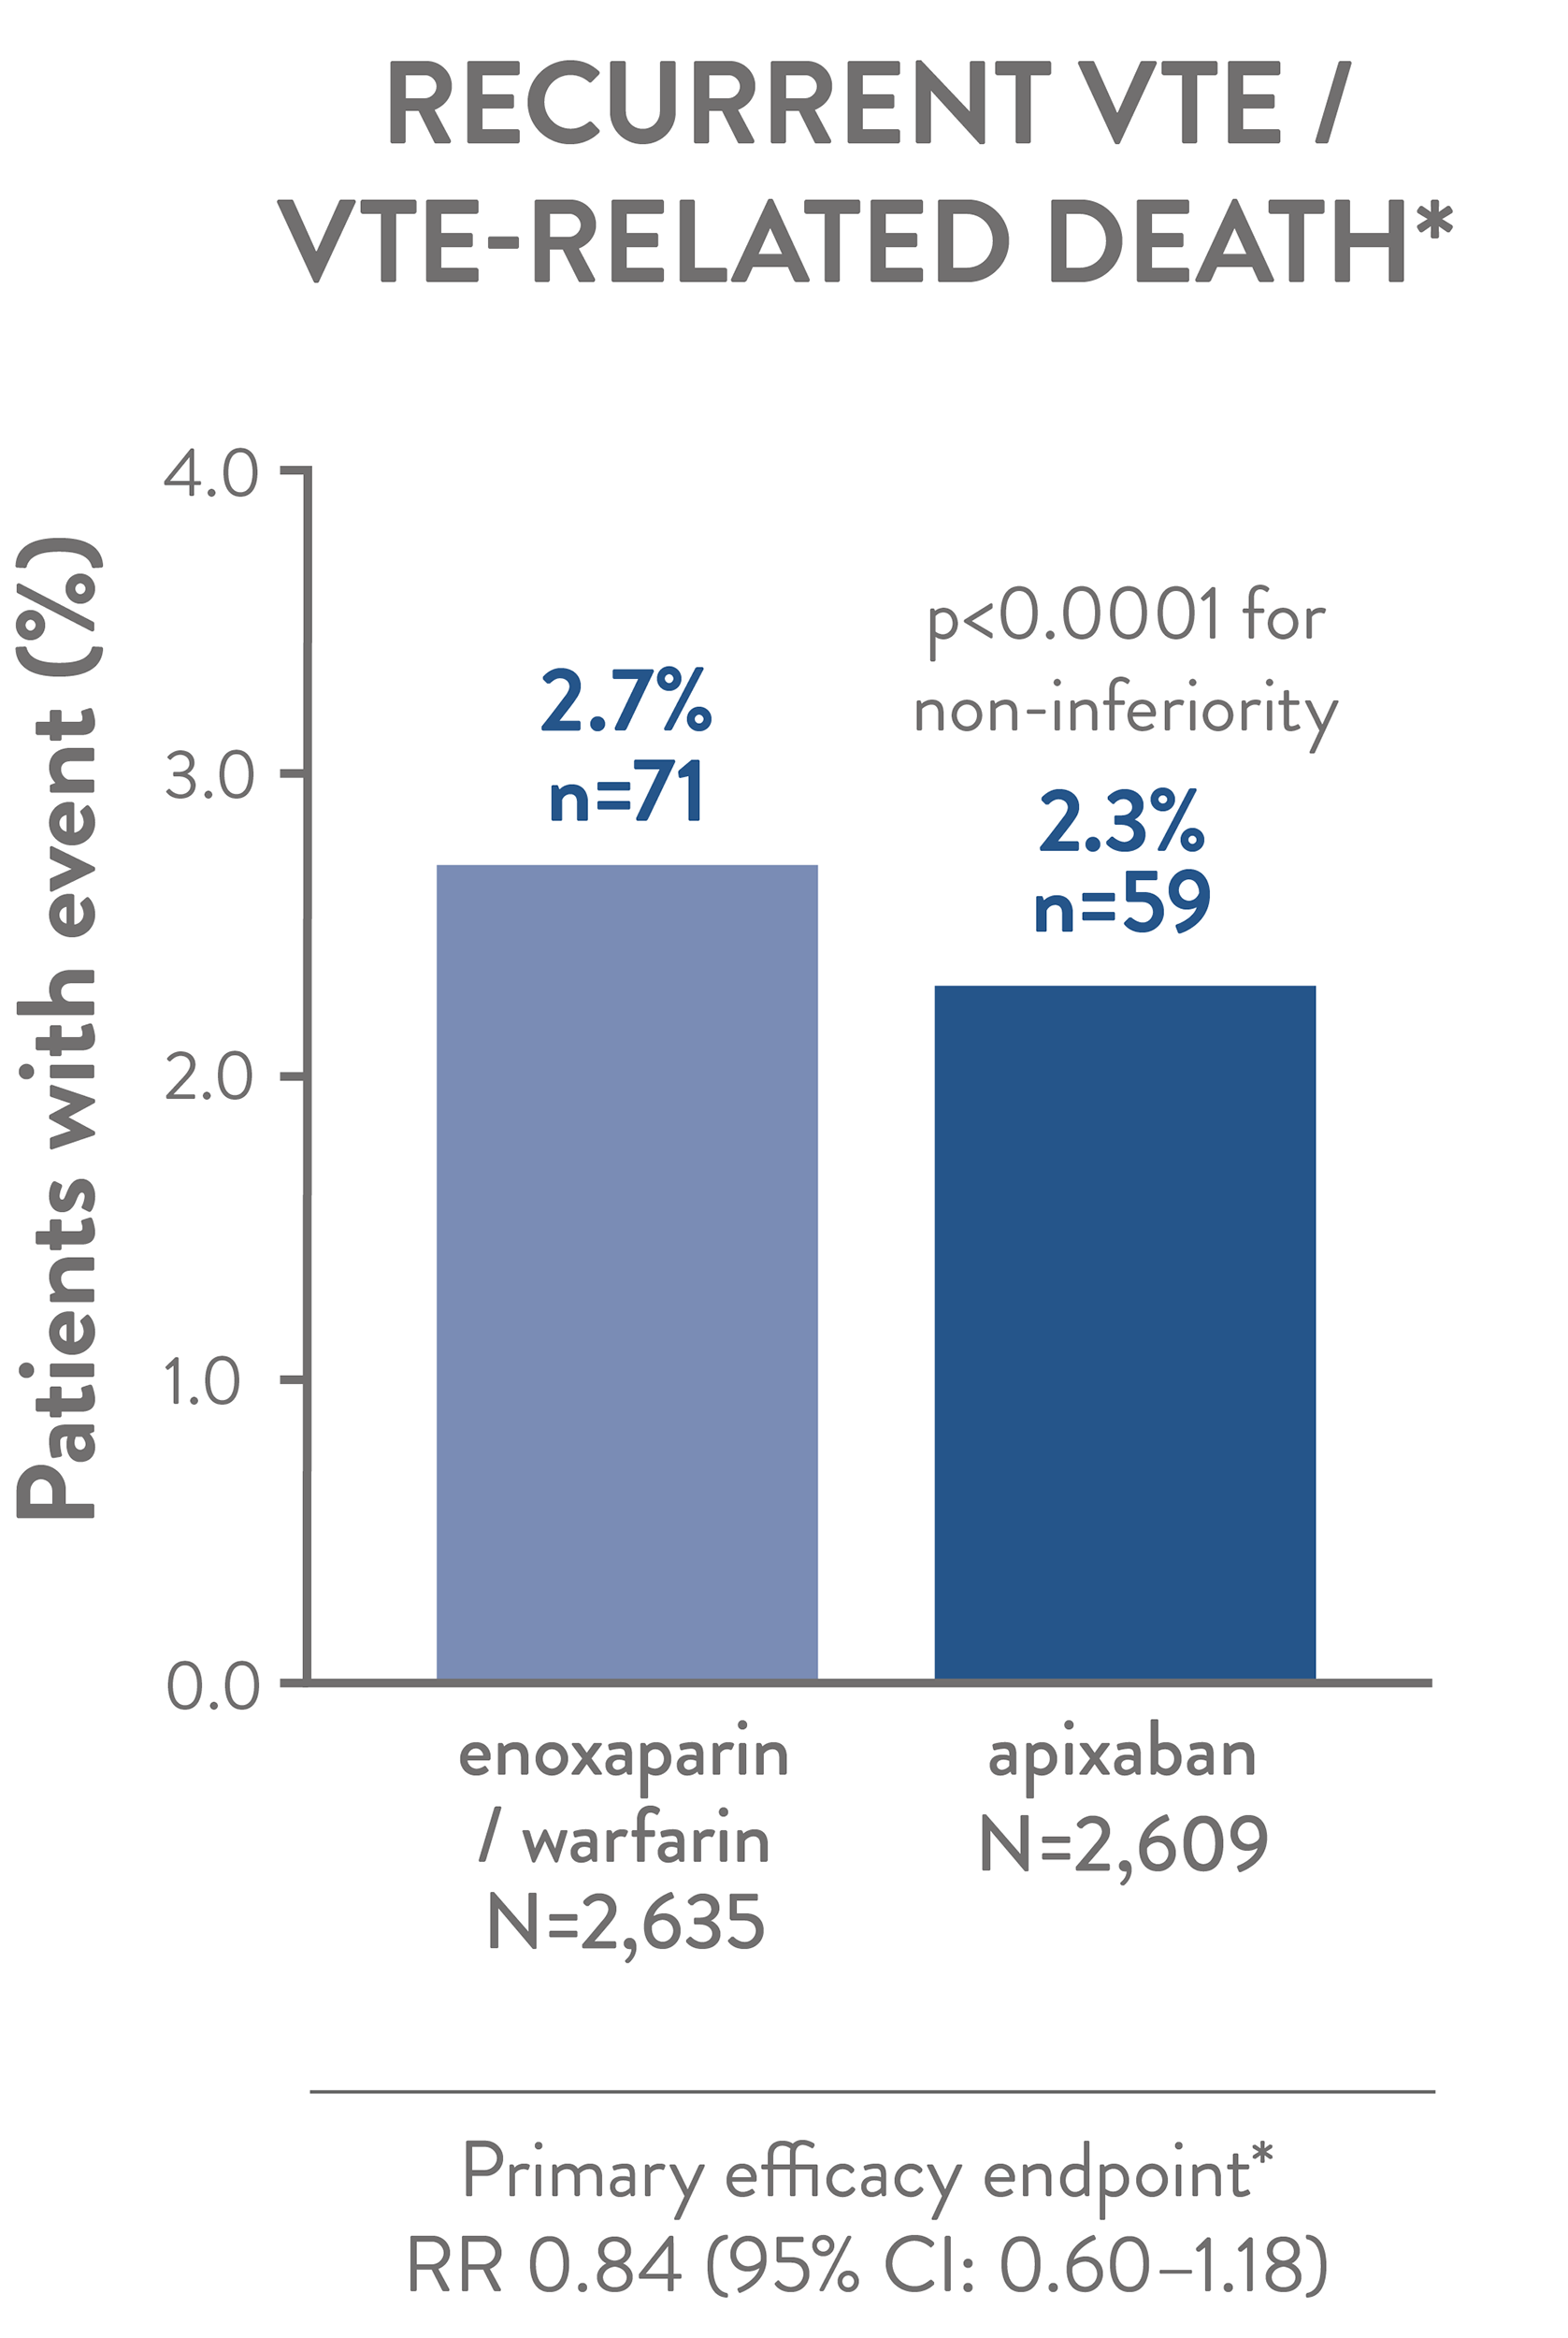 Efficacy of apixaban vs. enoxaparin / warfarin: The AMPLIFY clinical trial